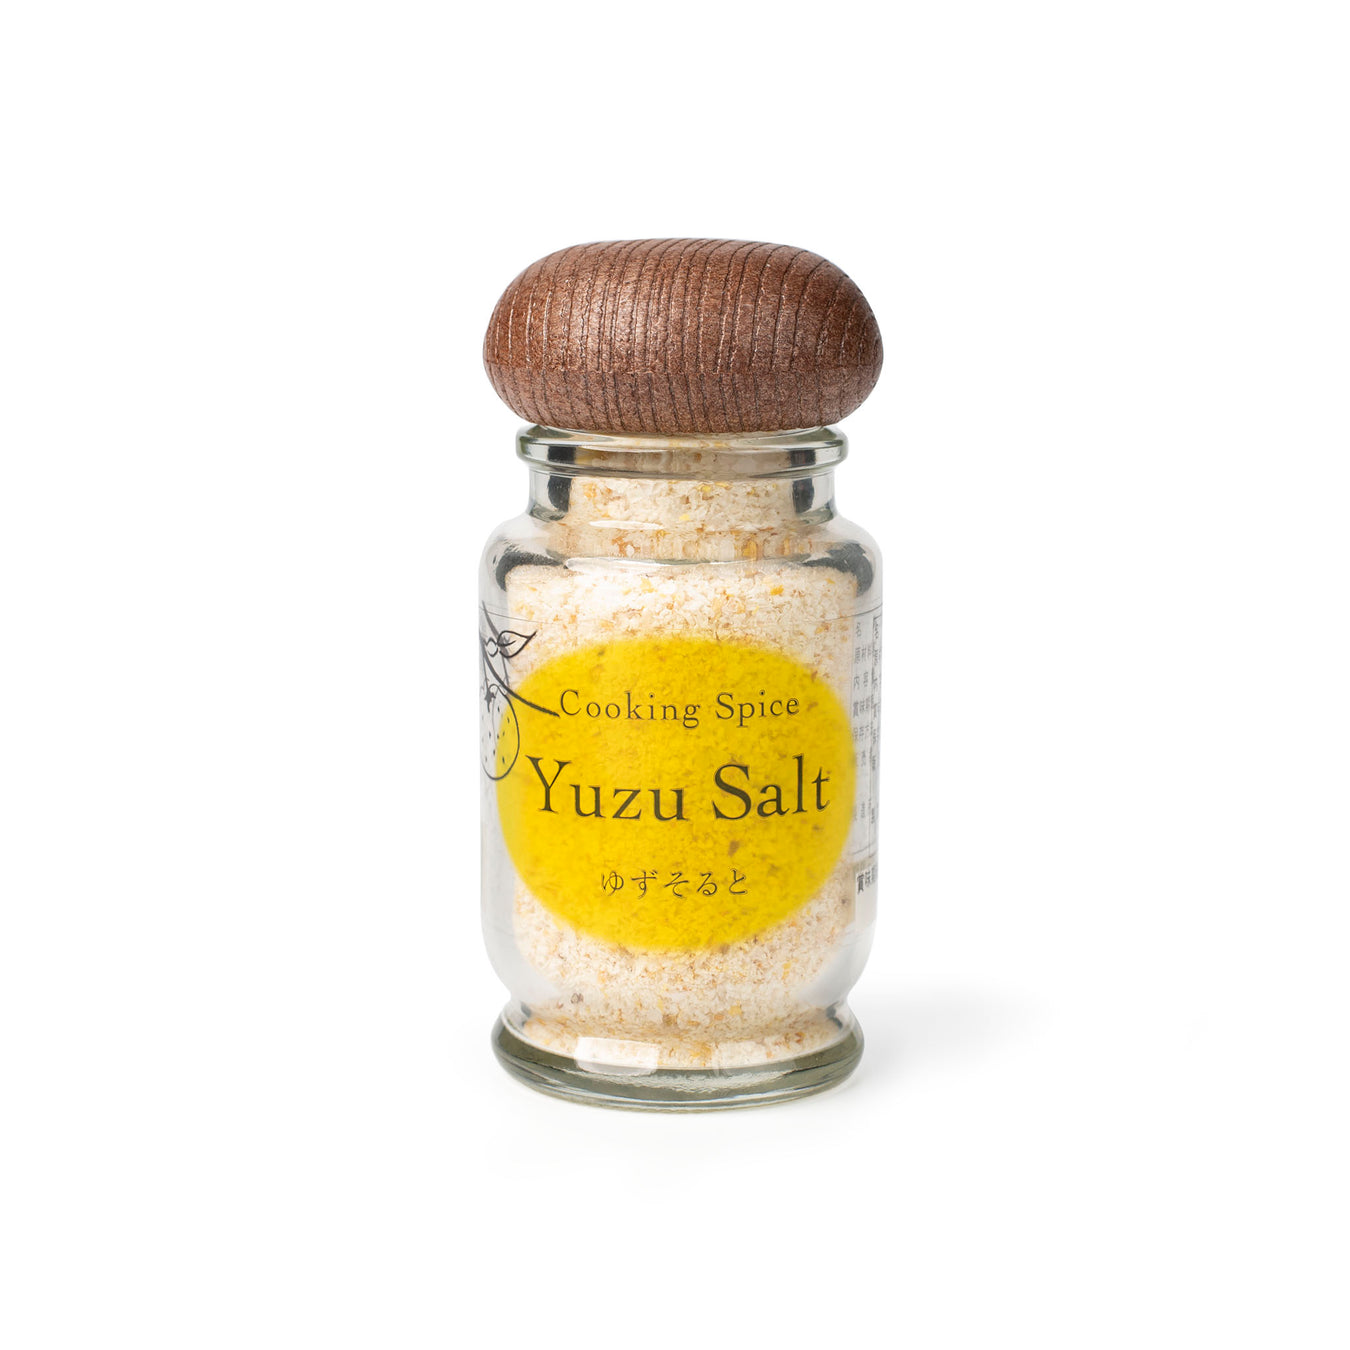 Spice / Salt